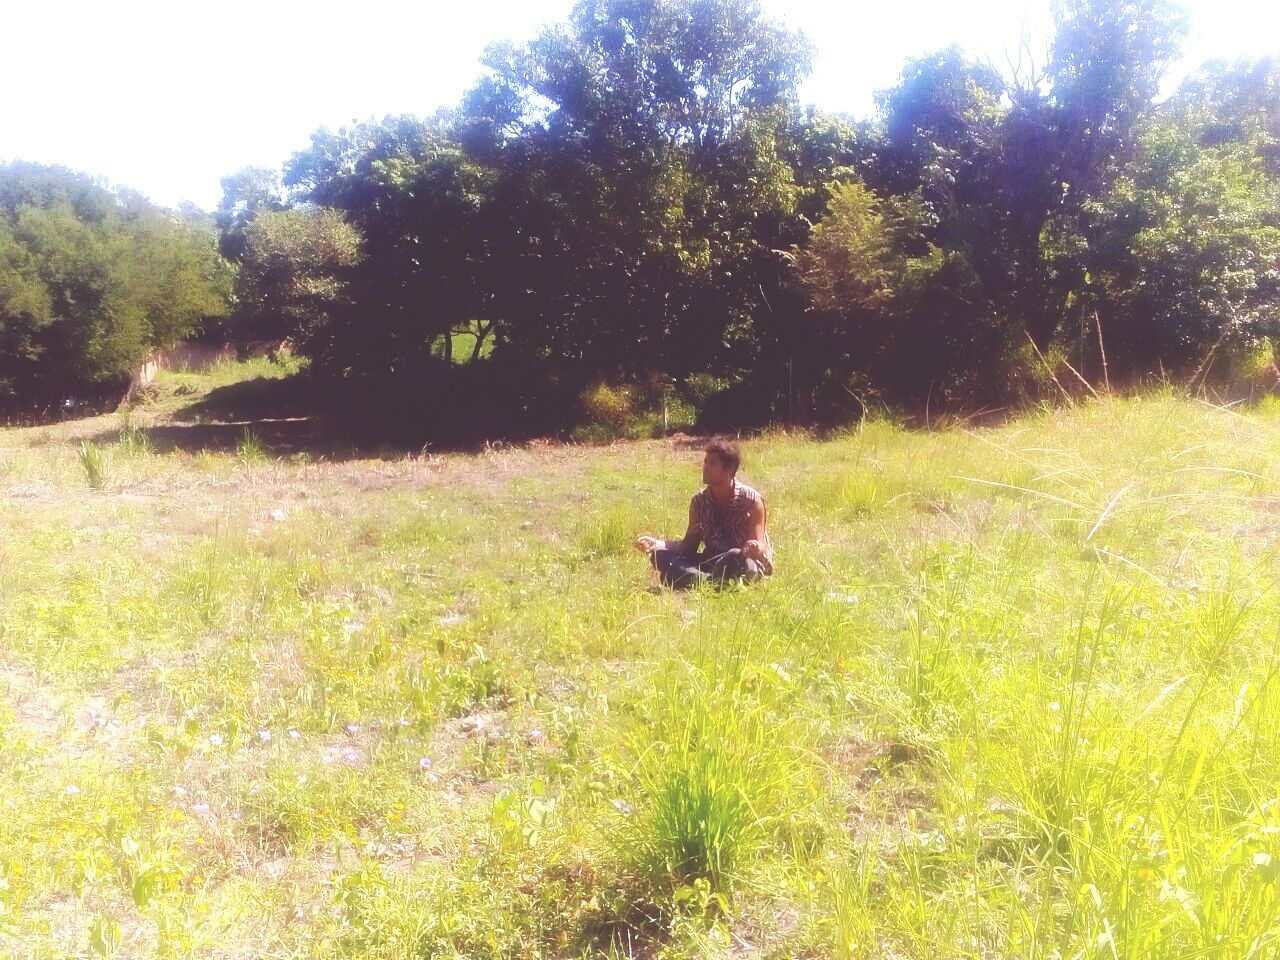 MAN RELAXING ON GRASSY FIELD